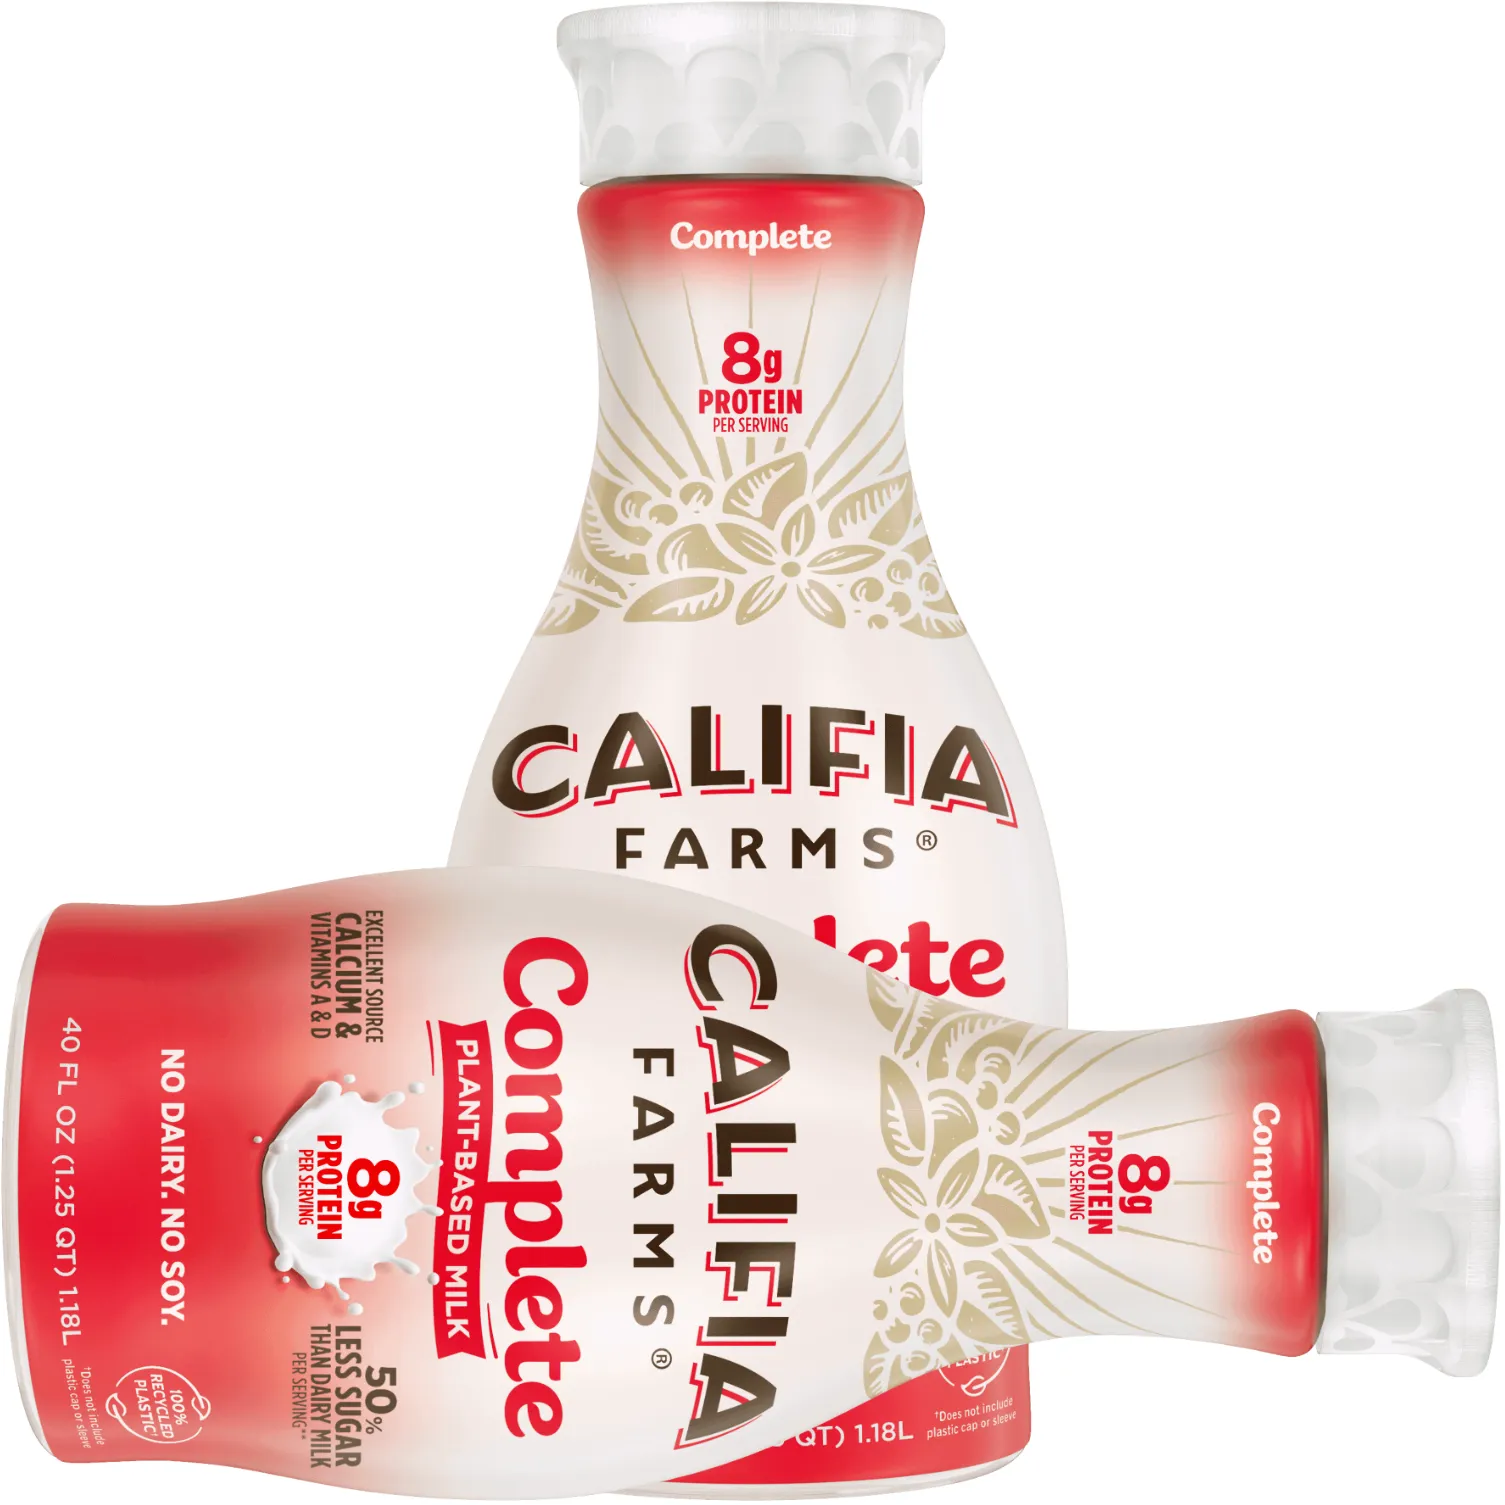 Free Califia Farms Complete Plant-Based Milk